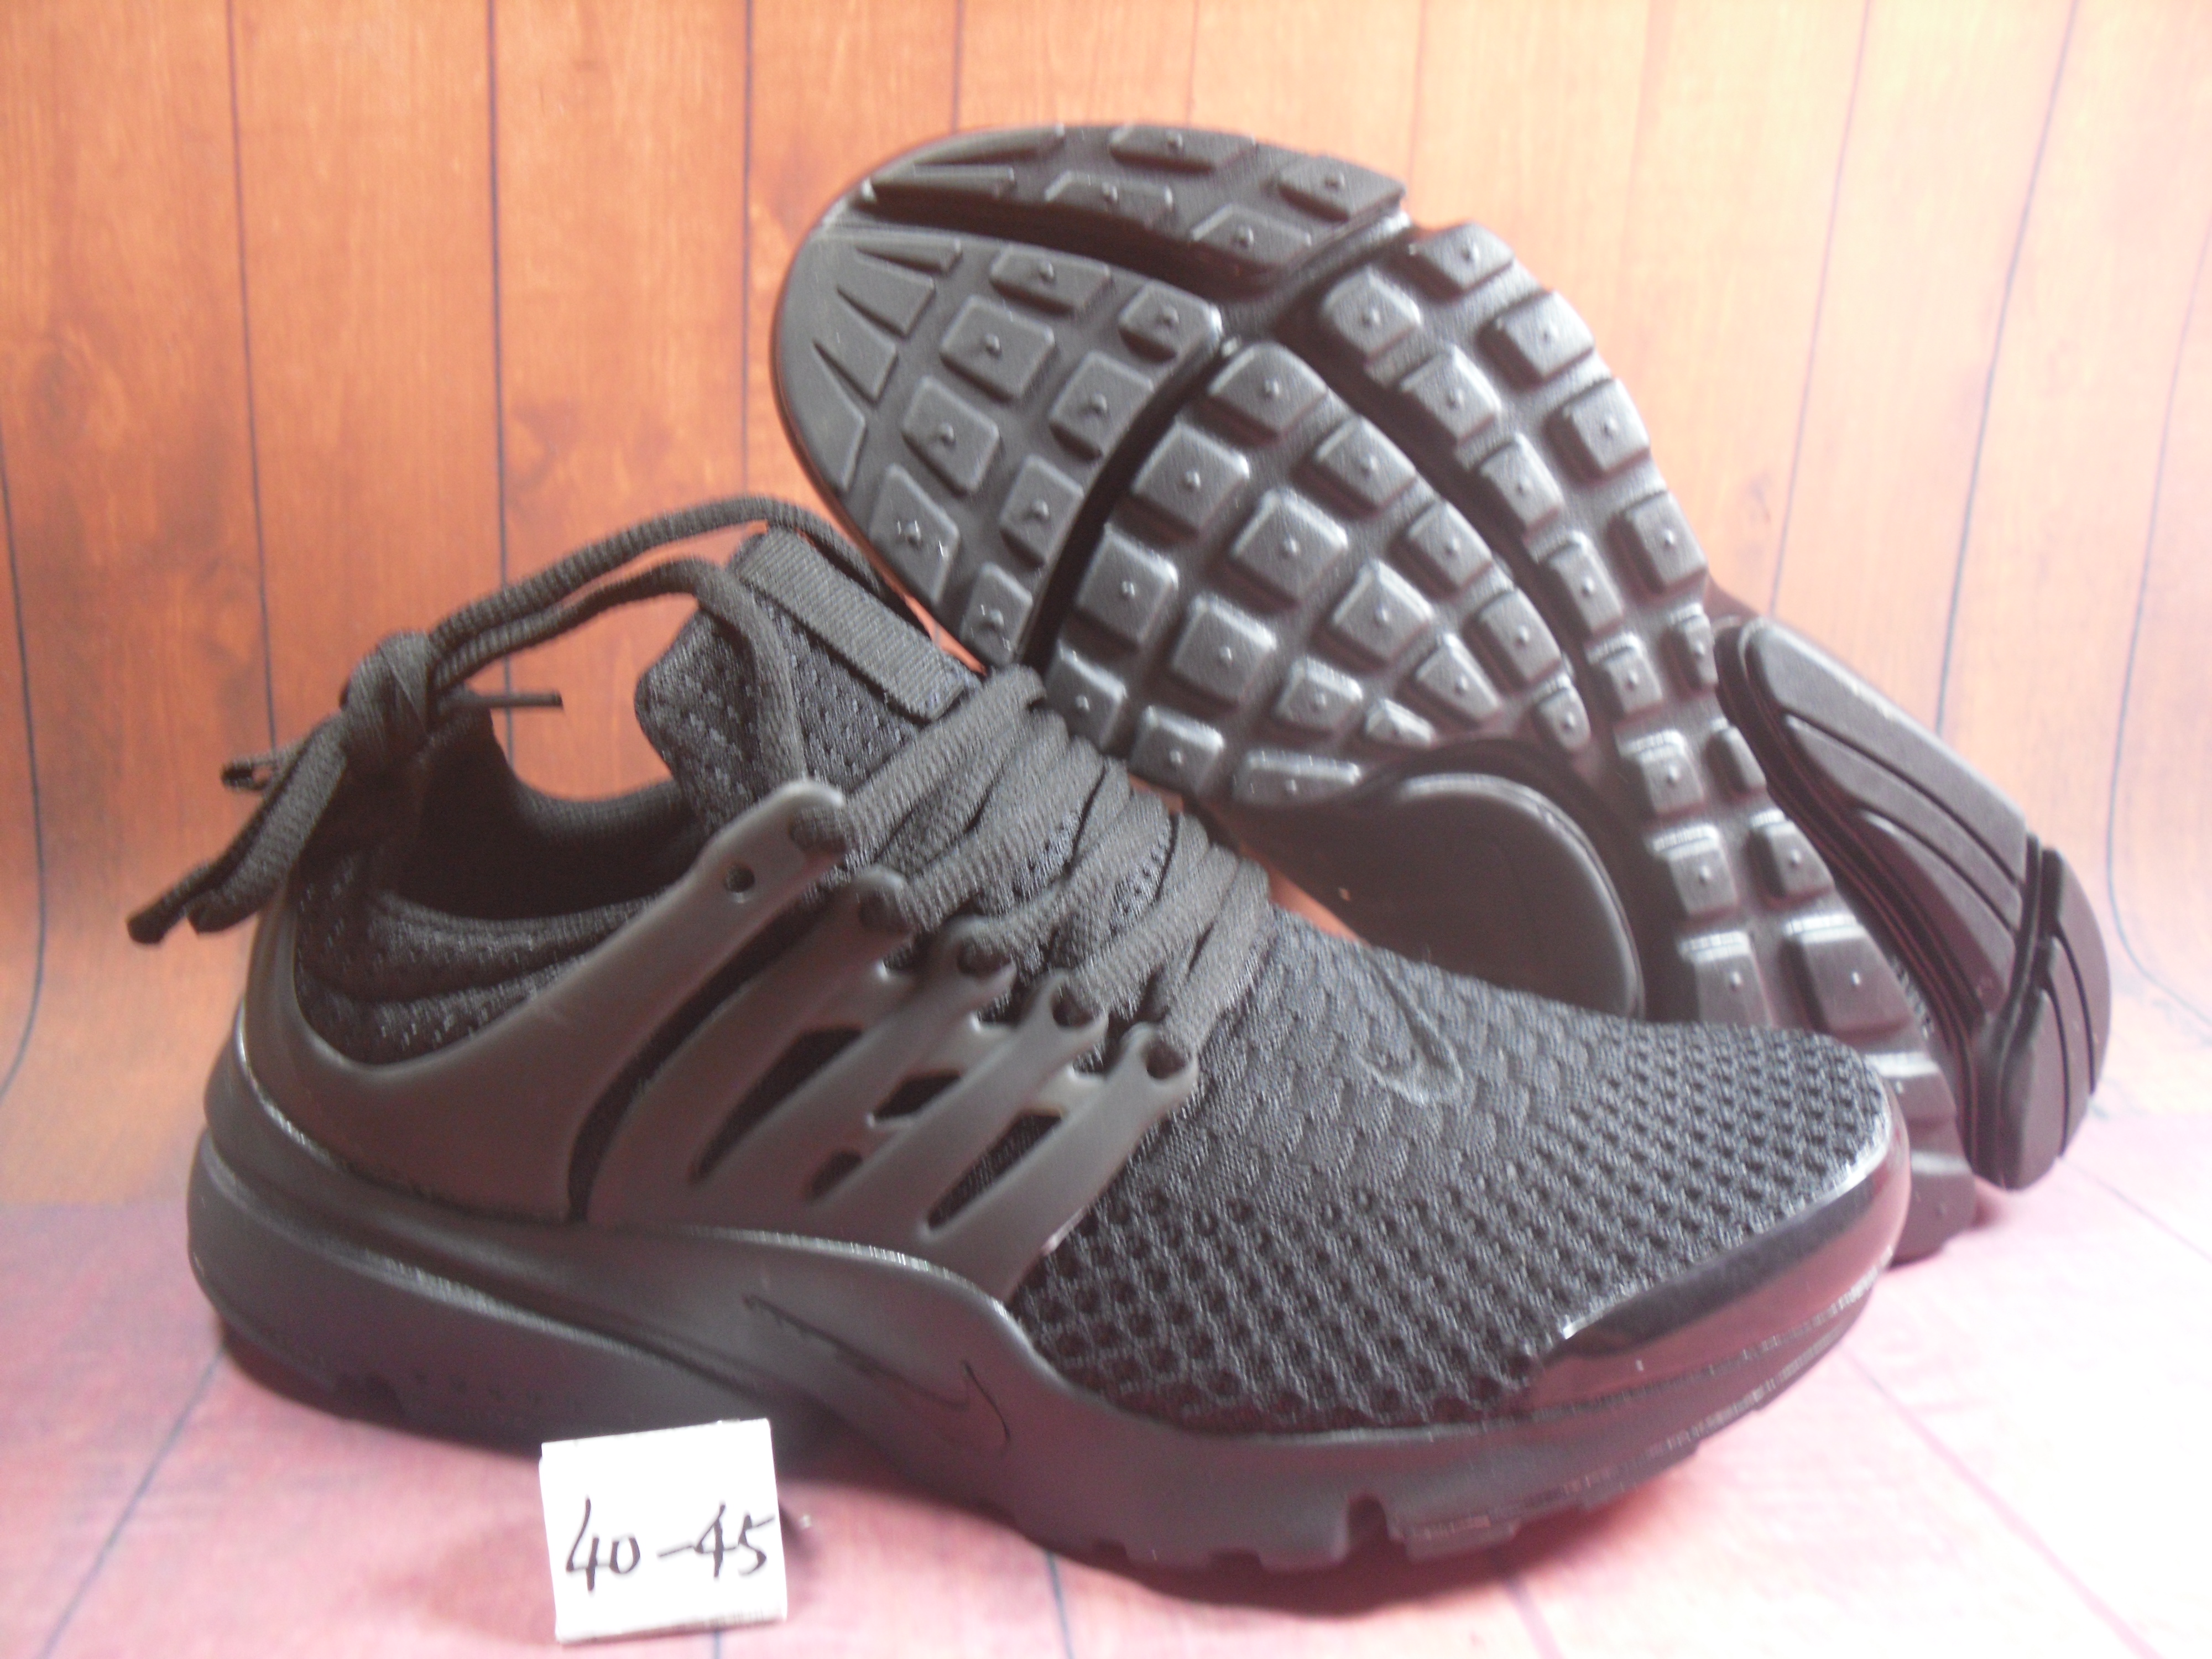 New Nike Air Presto Carbon Black Shoes